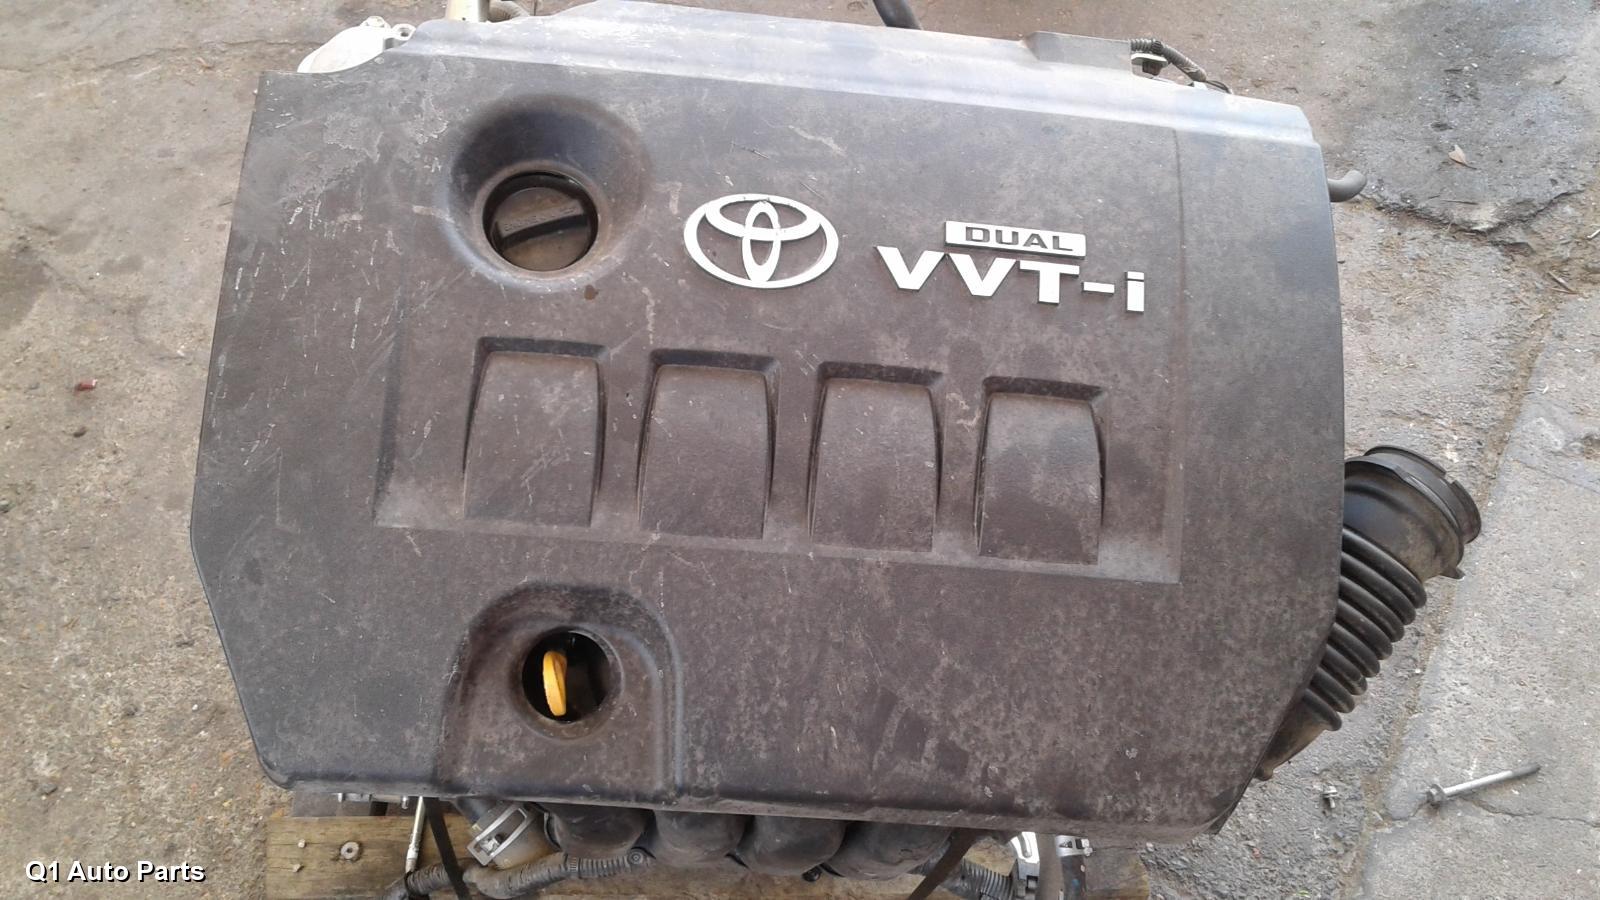 Second Hand Toyota Engines